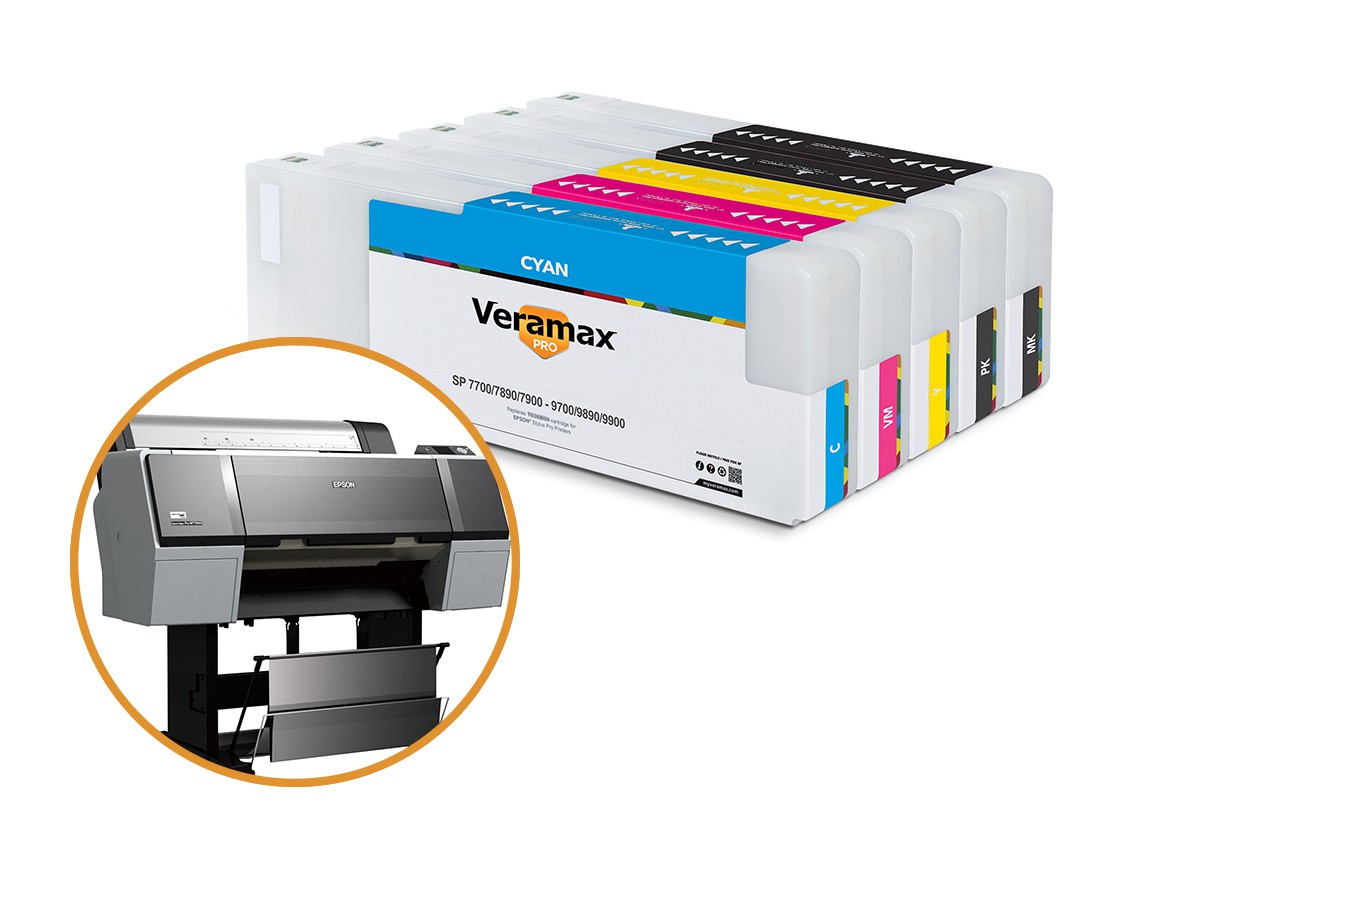 Veramax PRO Ink Cartridges for Stylus Pro 7700-9700 Printers